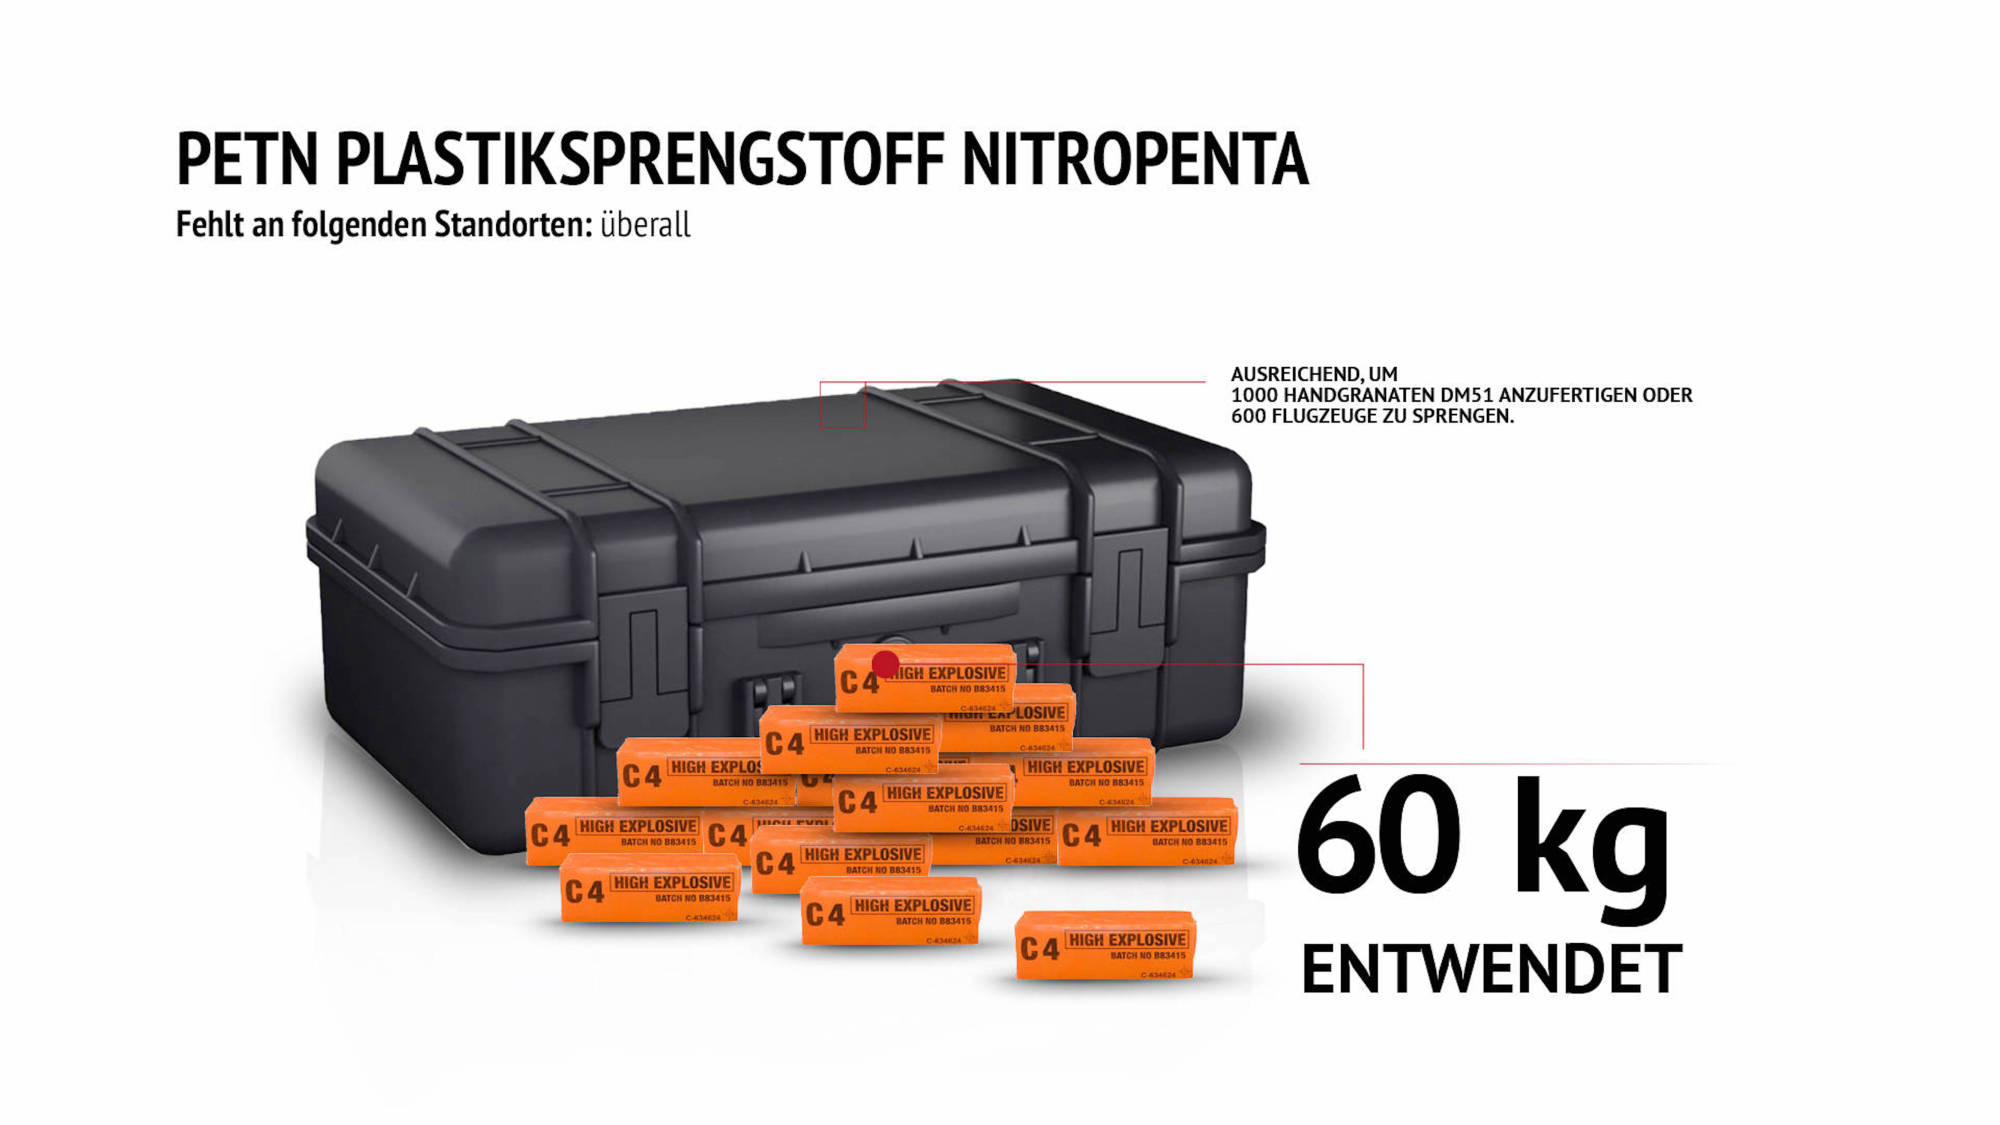 Verschwundene Waffen: Petin Plastiksprengstoff Nitropenta. 60 Kg entwendet.